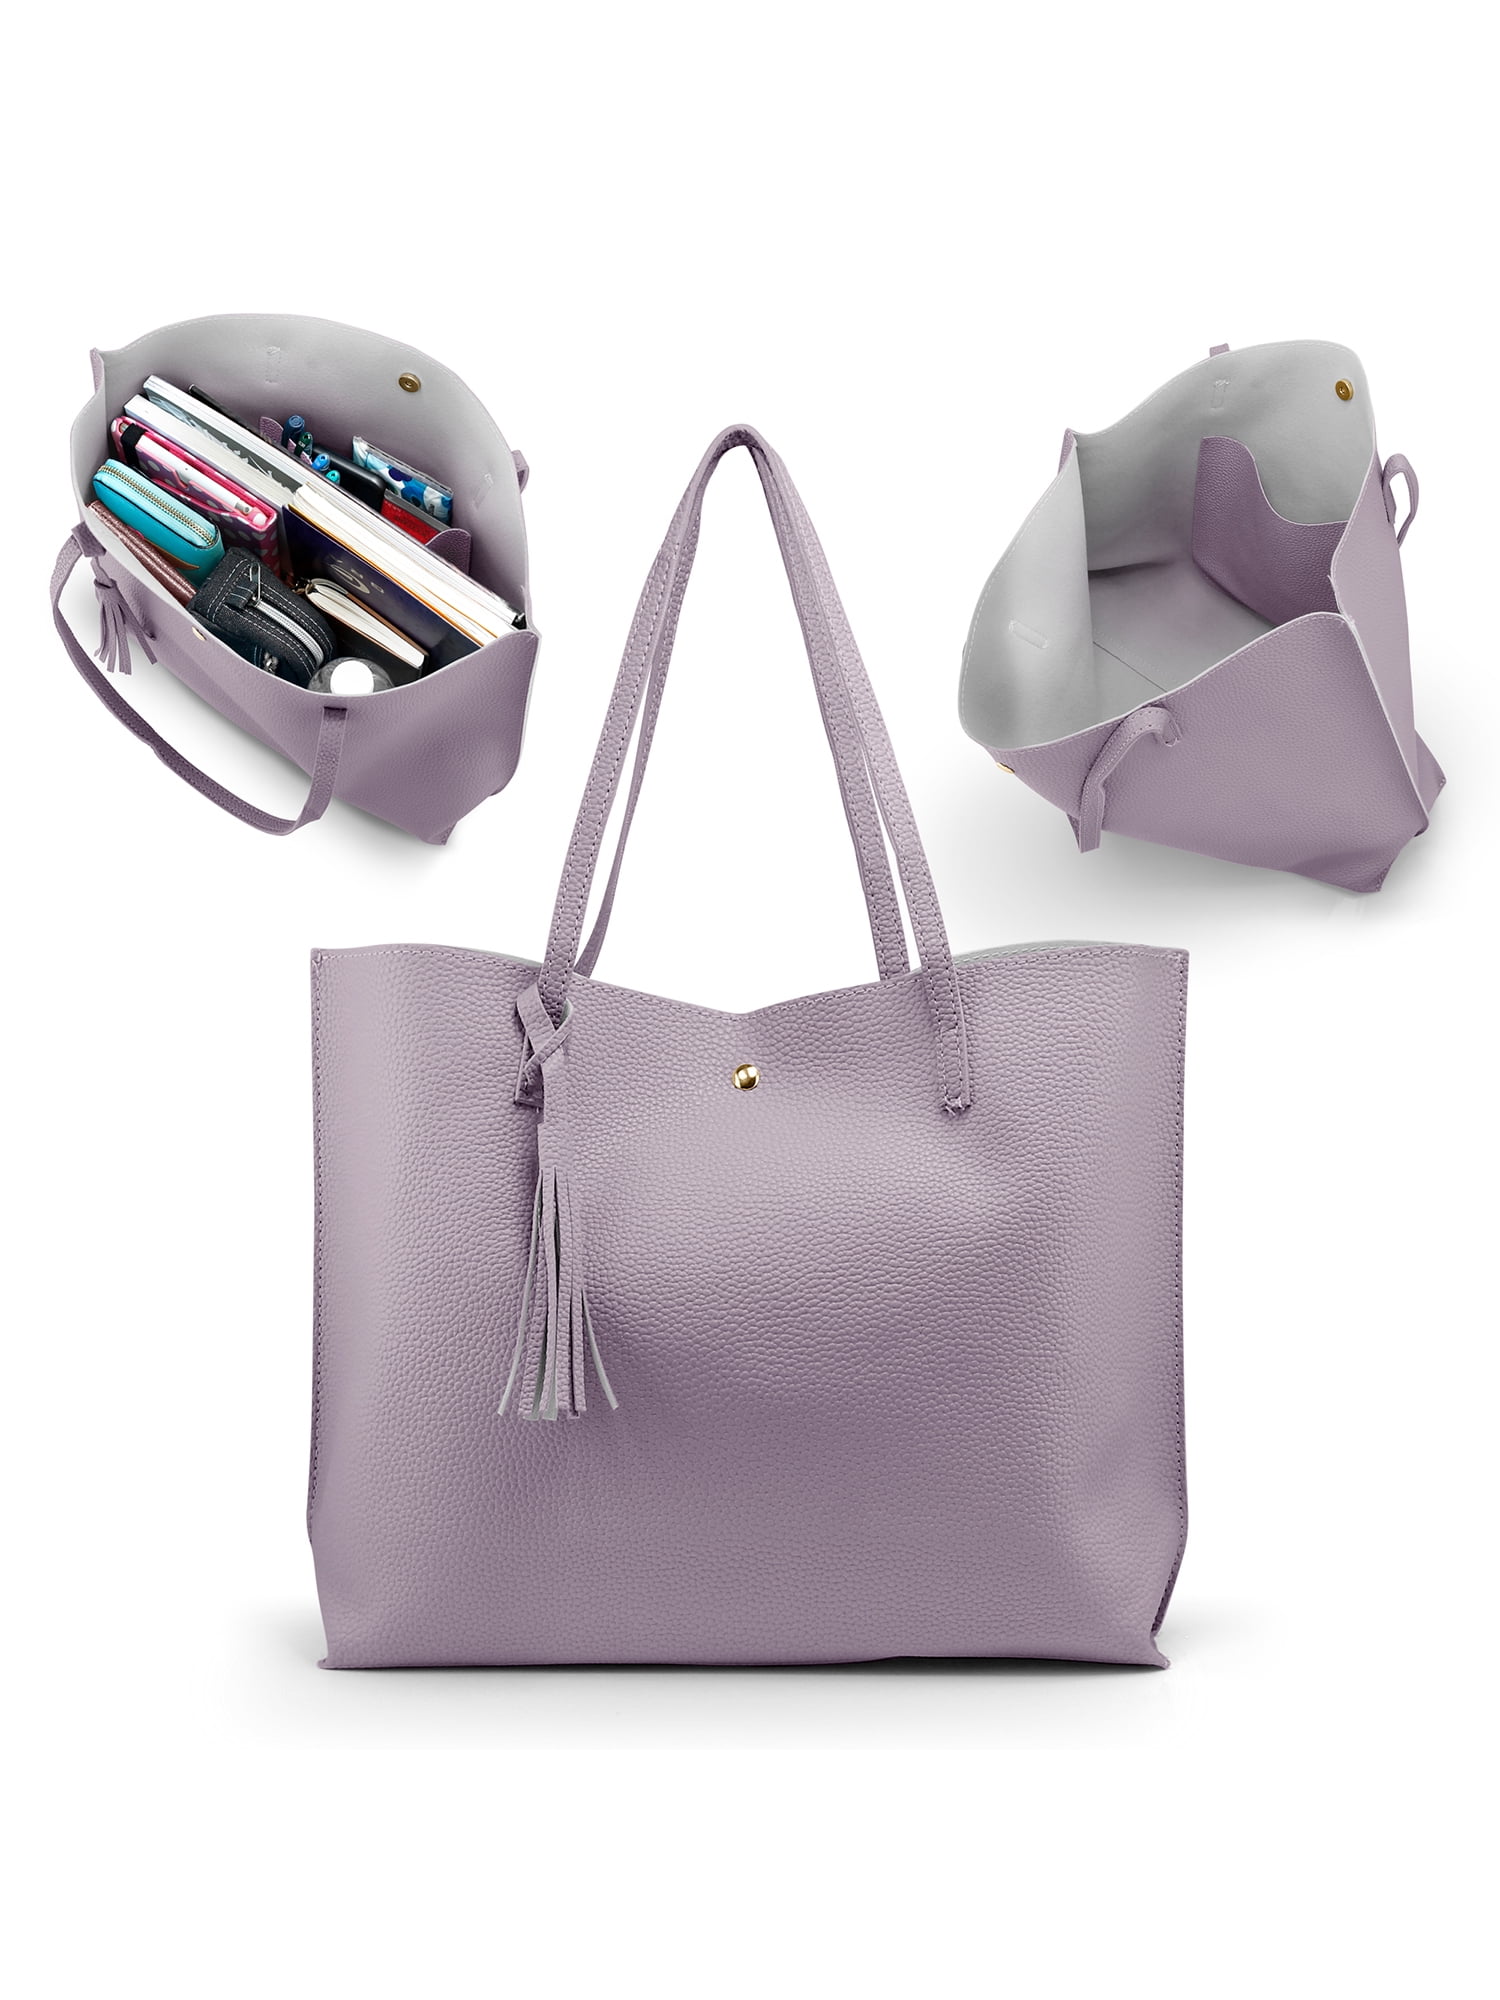 Oct17 Women Tote Bag Tassels Leather Shoulder Handbags Fashion Ladies Purses Satchel Messenger Bags - Hot Pink, Women's, Size: One Size